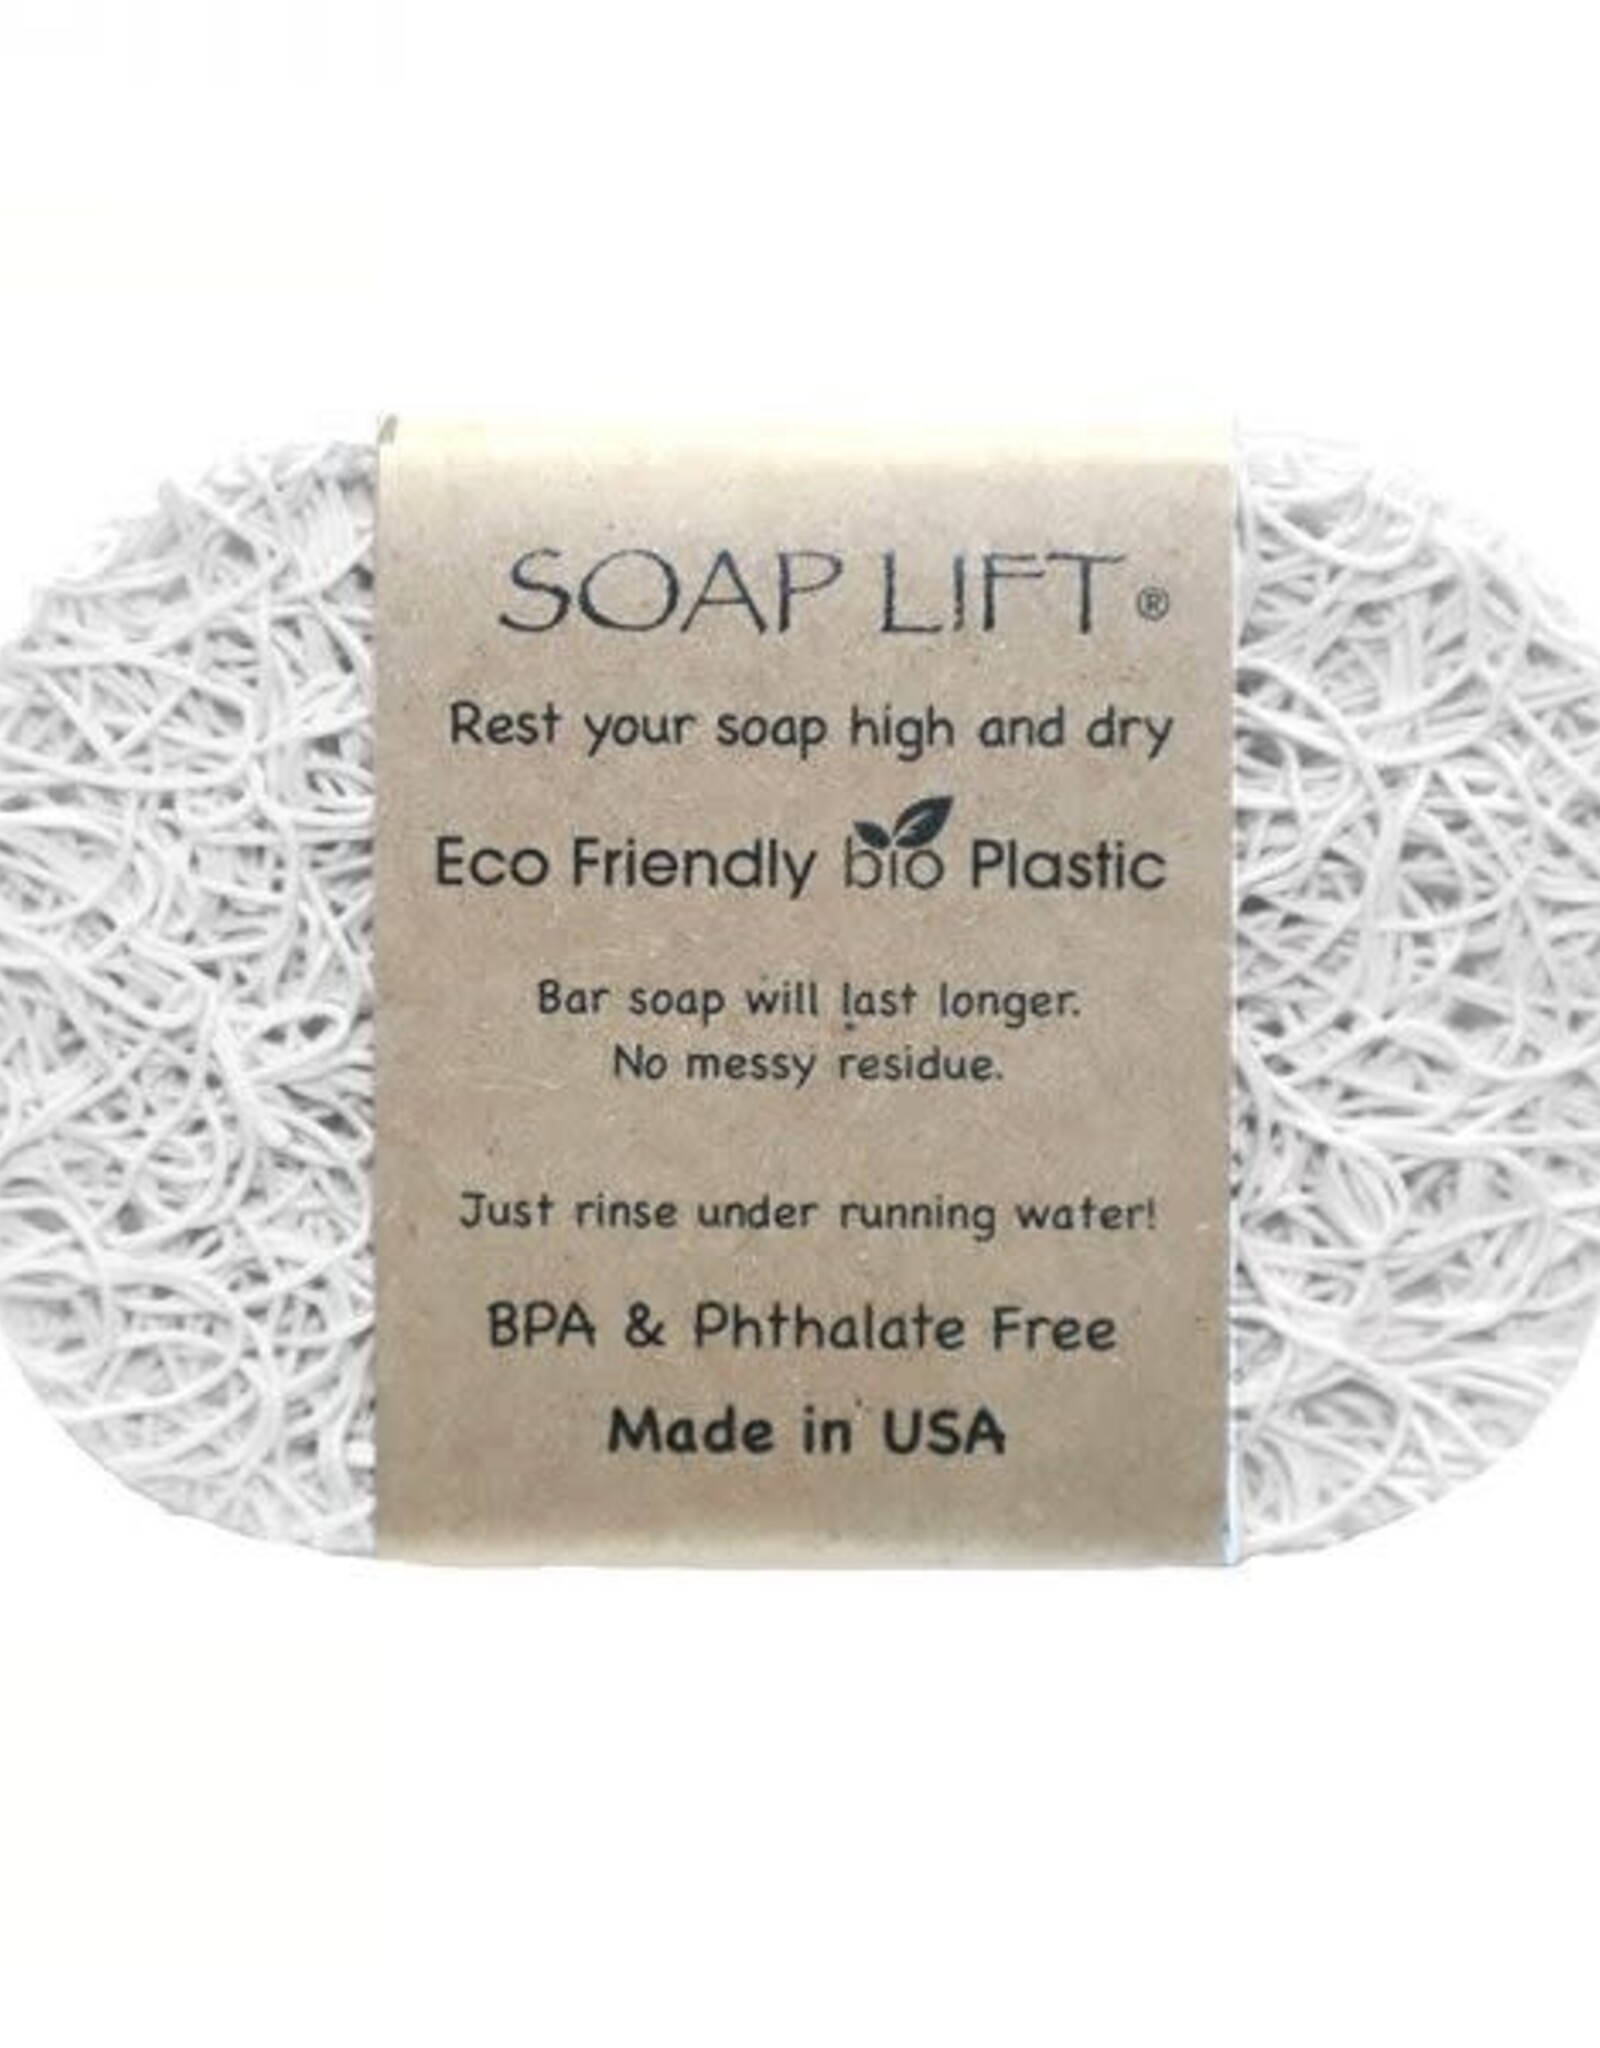 Soap Lift Eco Friendly Soap 'Lift'